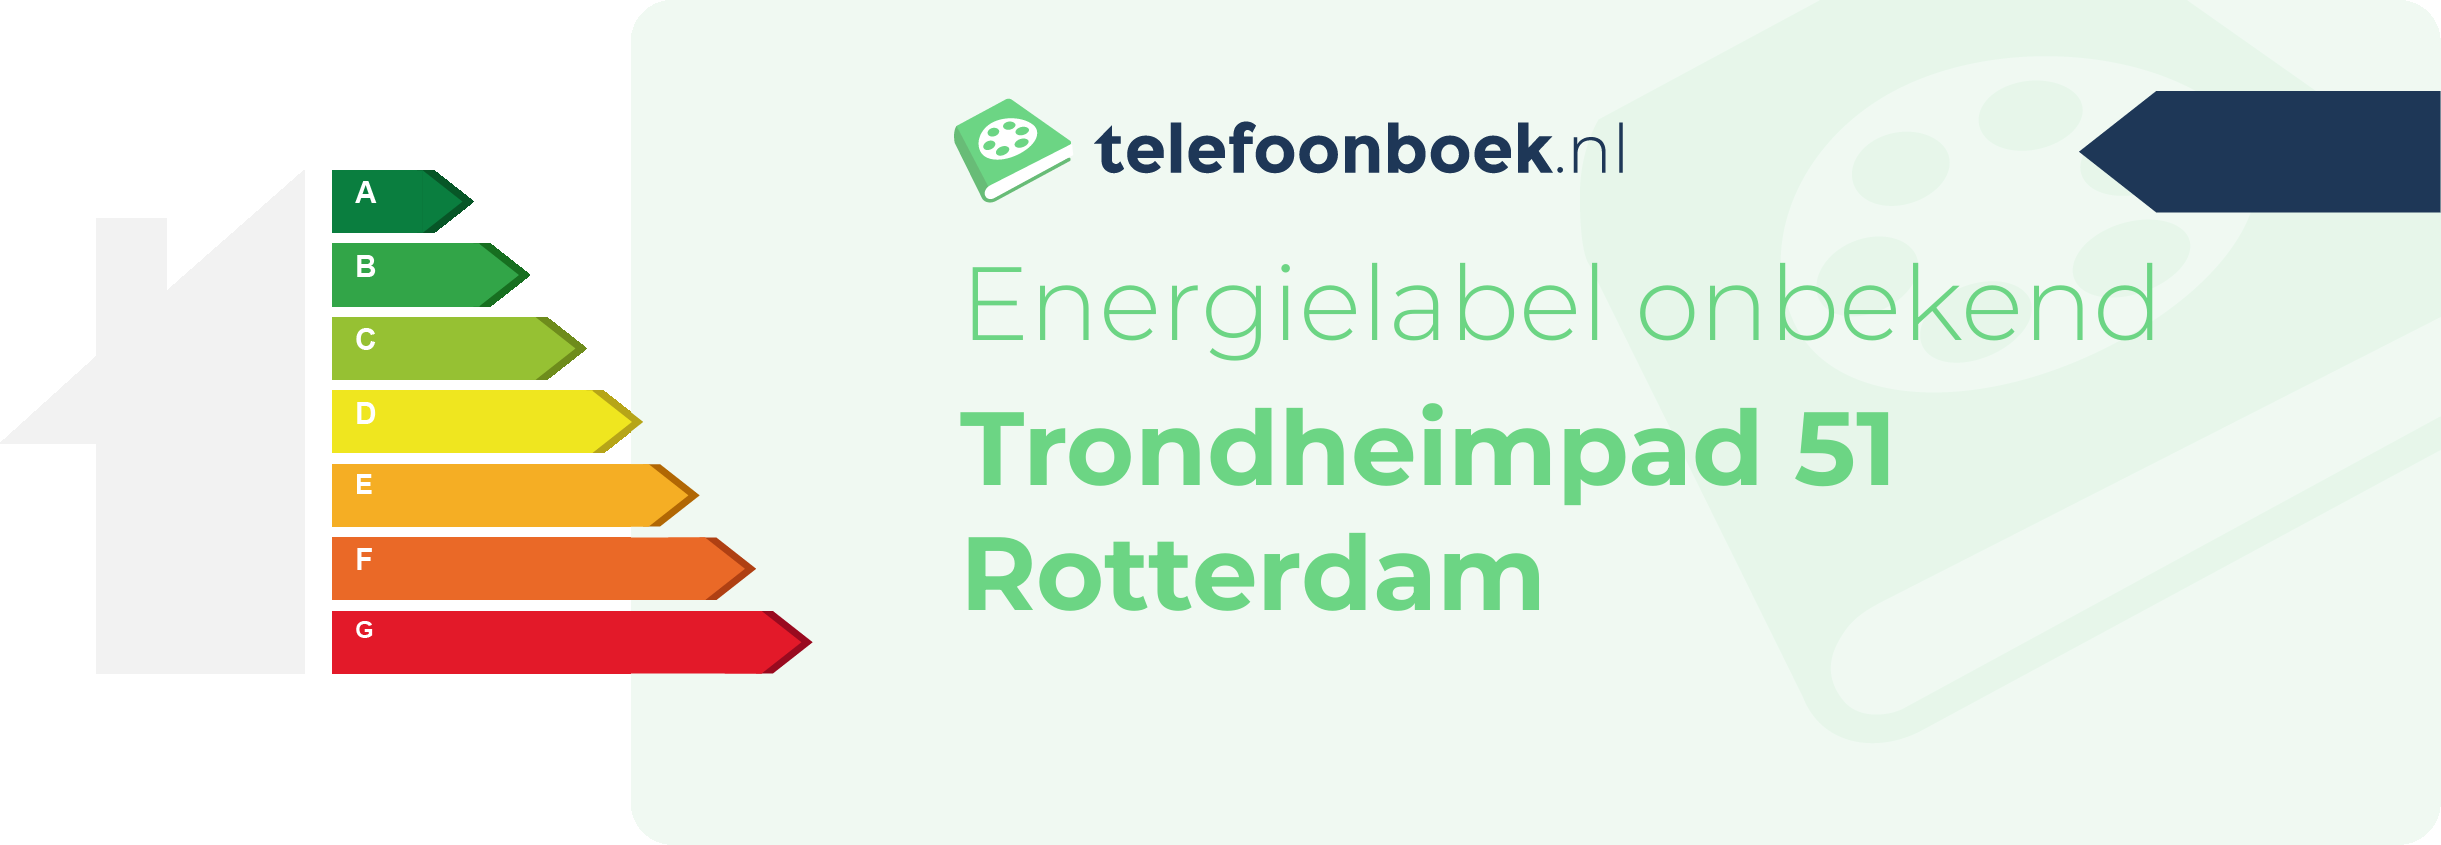 Energielabel Trondheimpad 51 Rotterdam